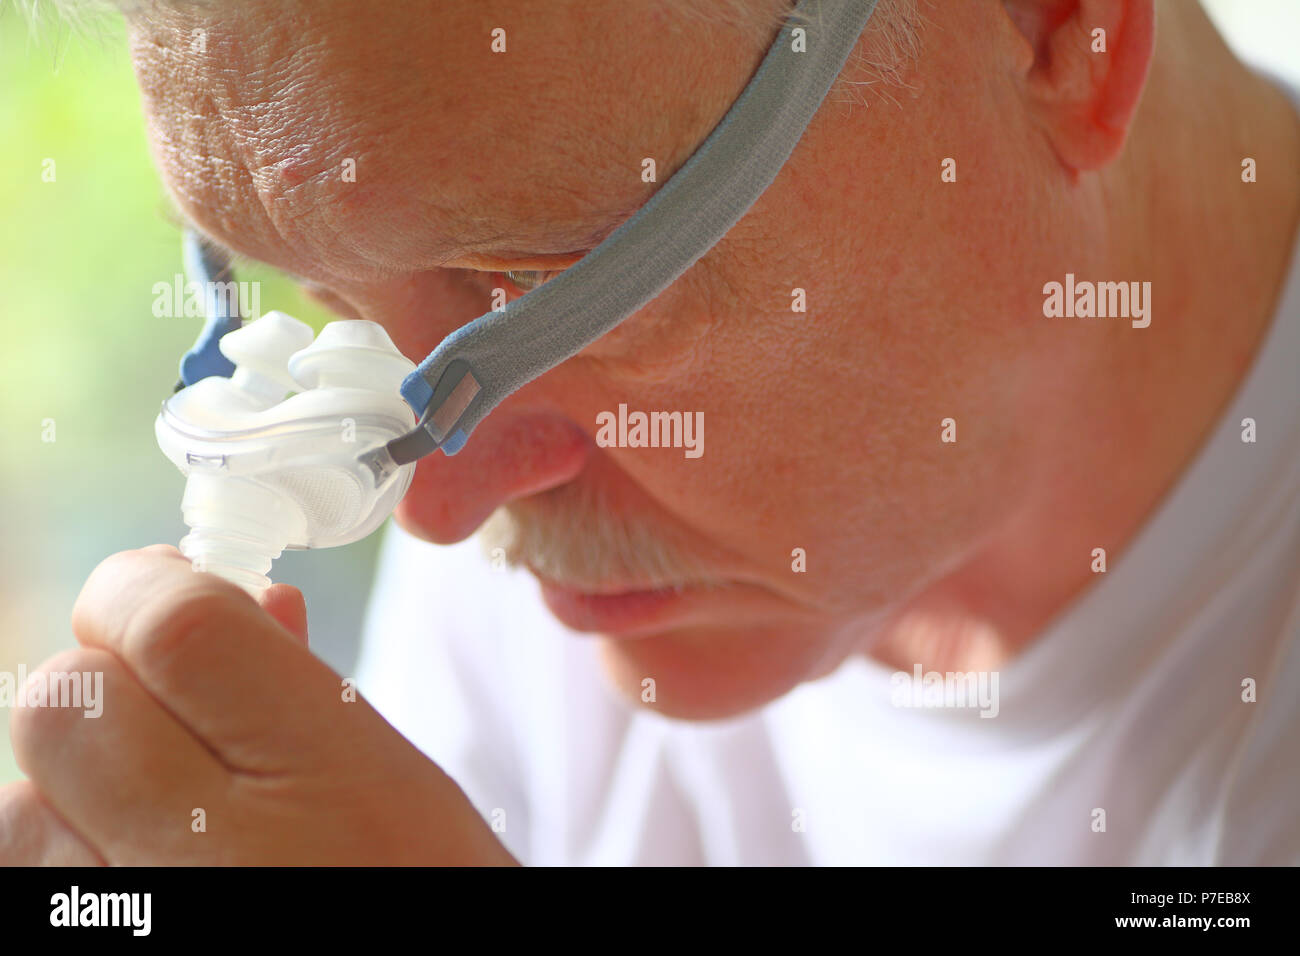 Senior man adjusts the nosepiece and headgear portion of his sleep apnea treatment device Stock Photo